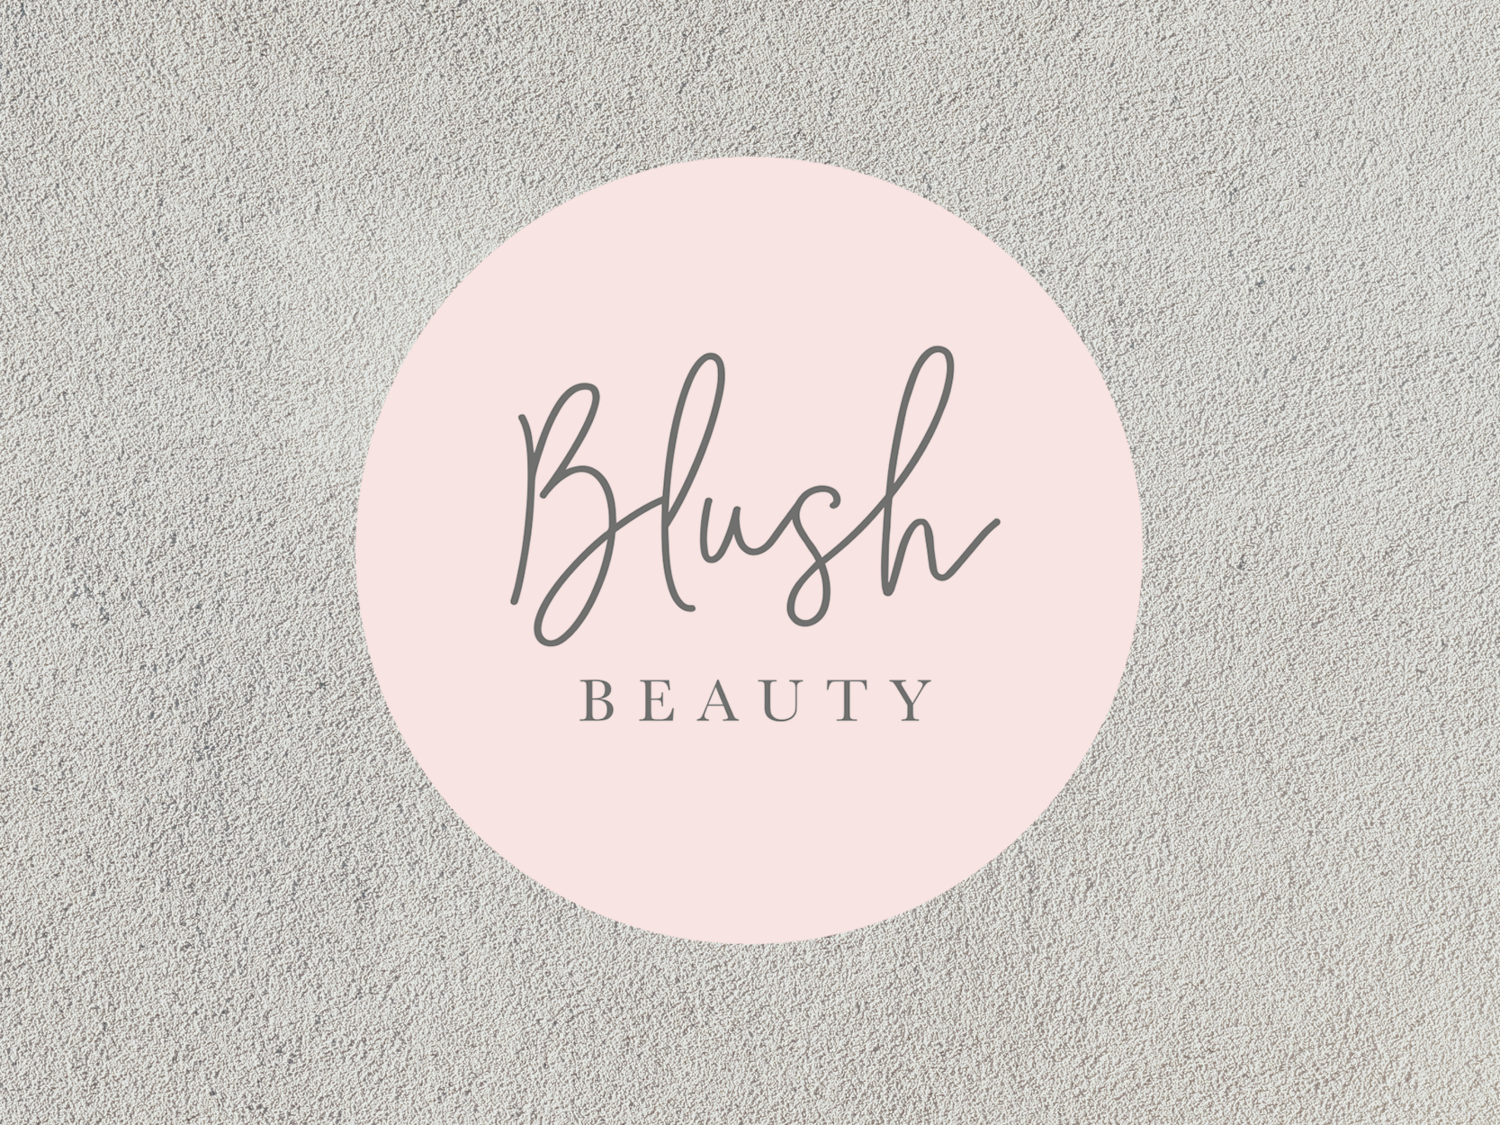 Team Blush Beauty